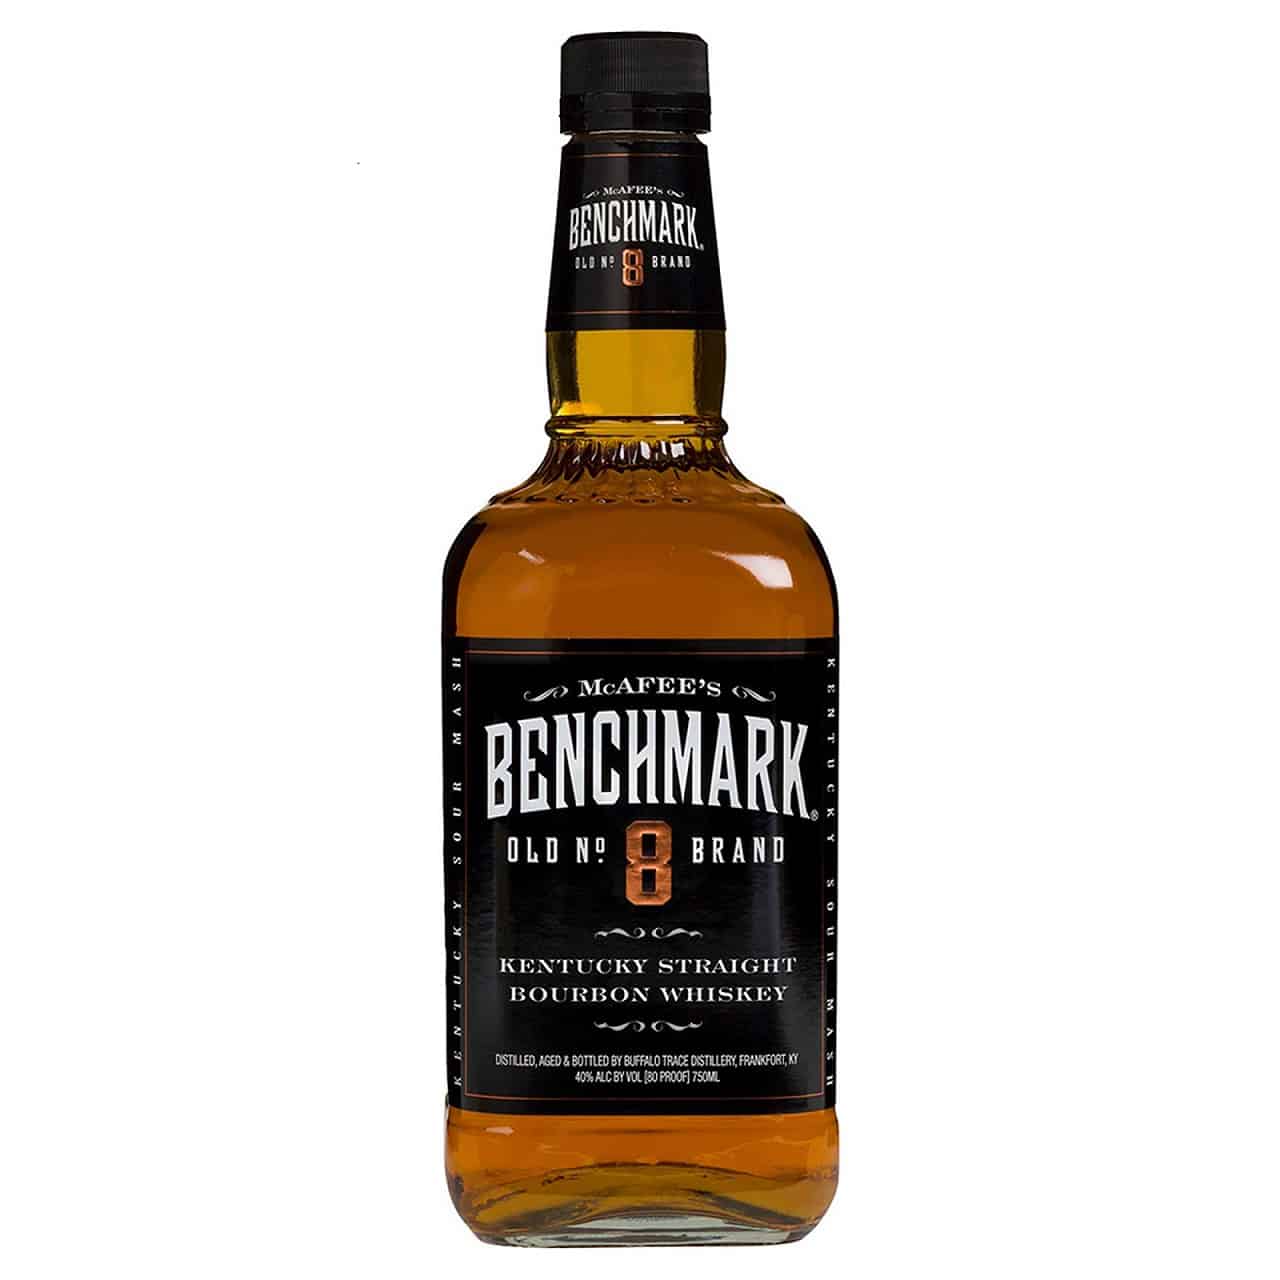 McAfee’s Benchmark Old Nº 8 Brand - Kentucky Straight Bourbon Whiskey